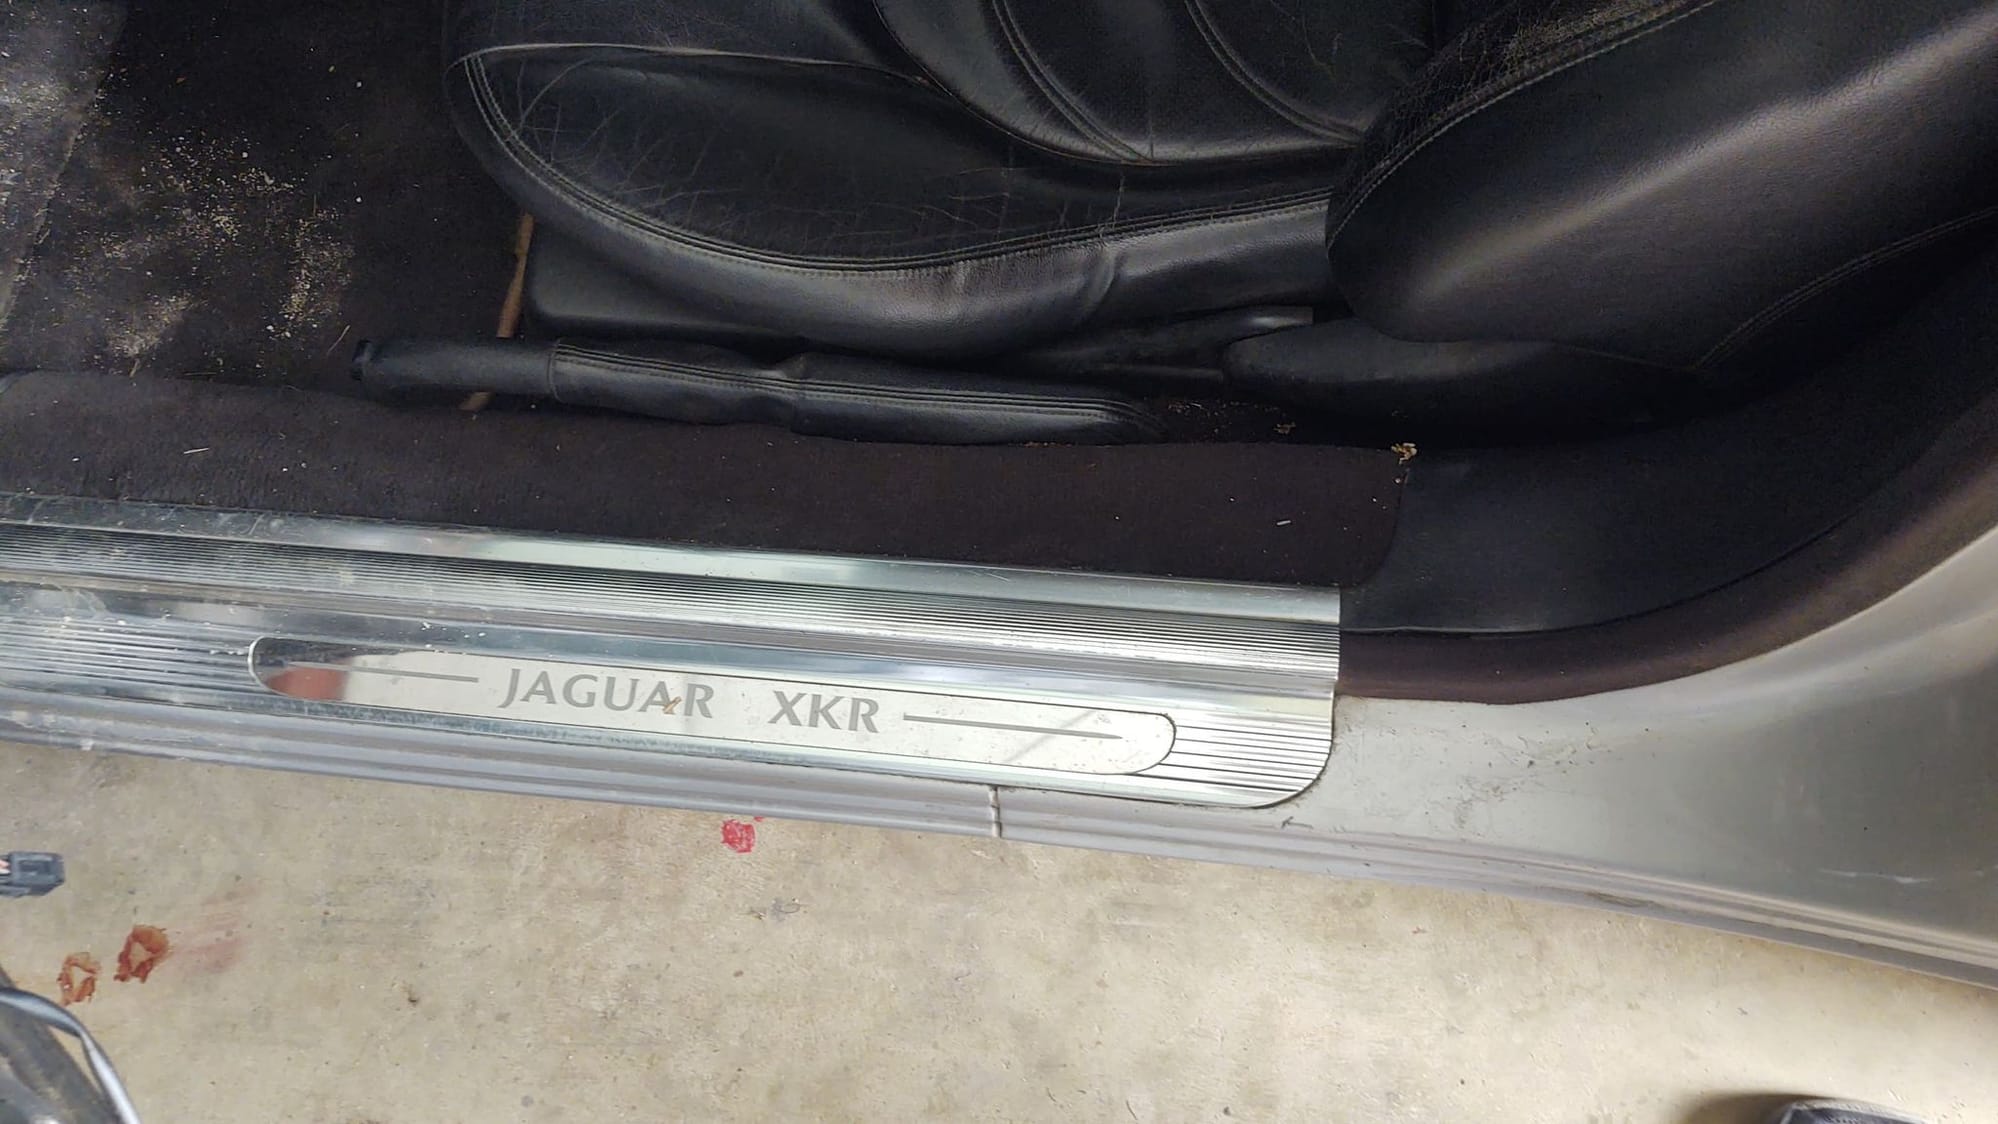 2001 Jaguar XKR -  - Lago Vista, TX 78645, United States